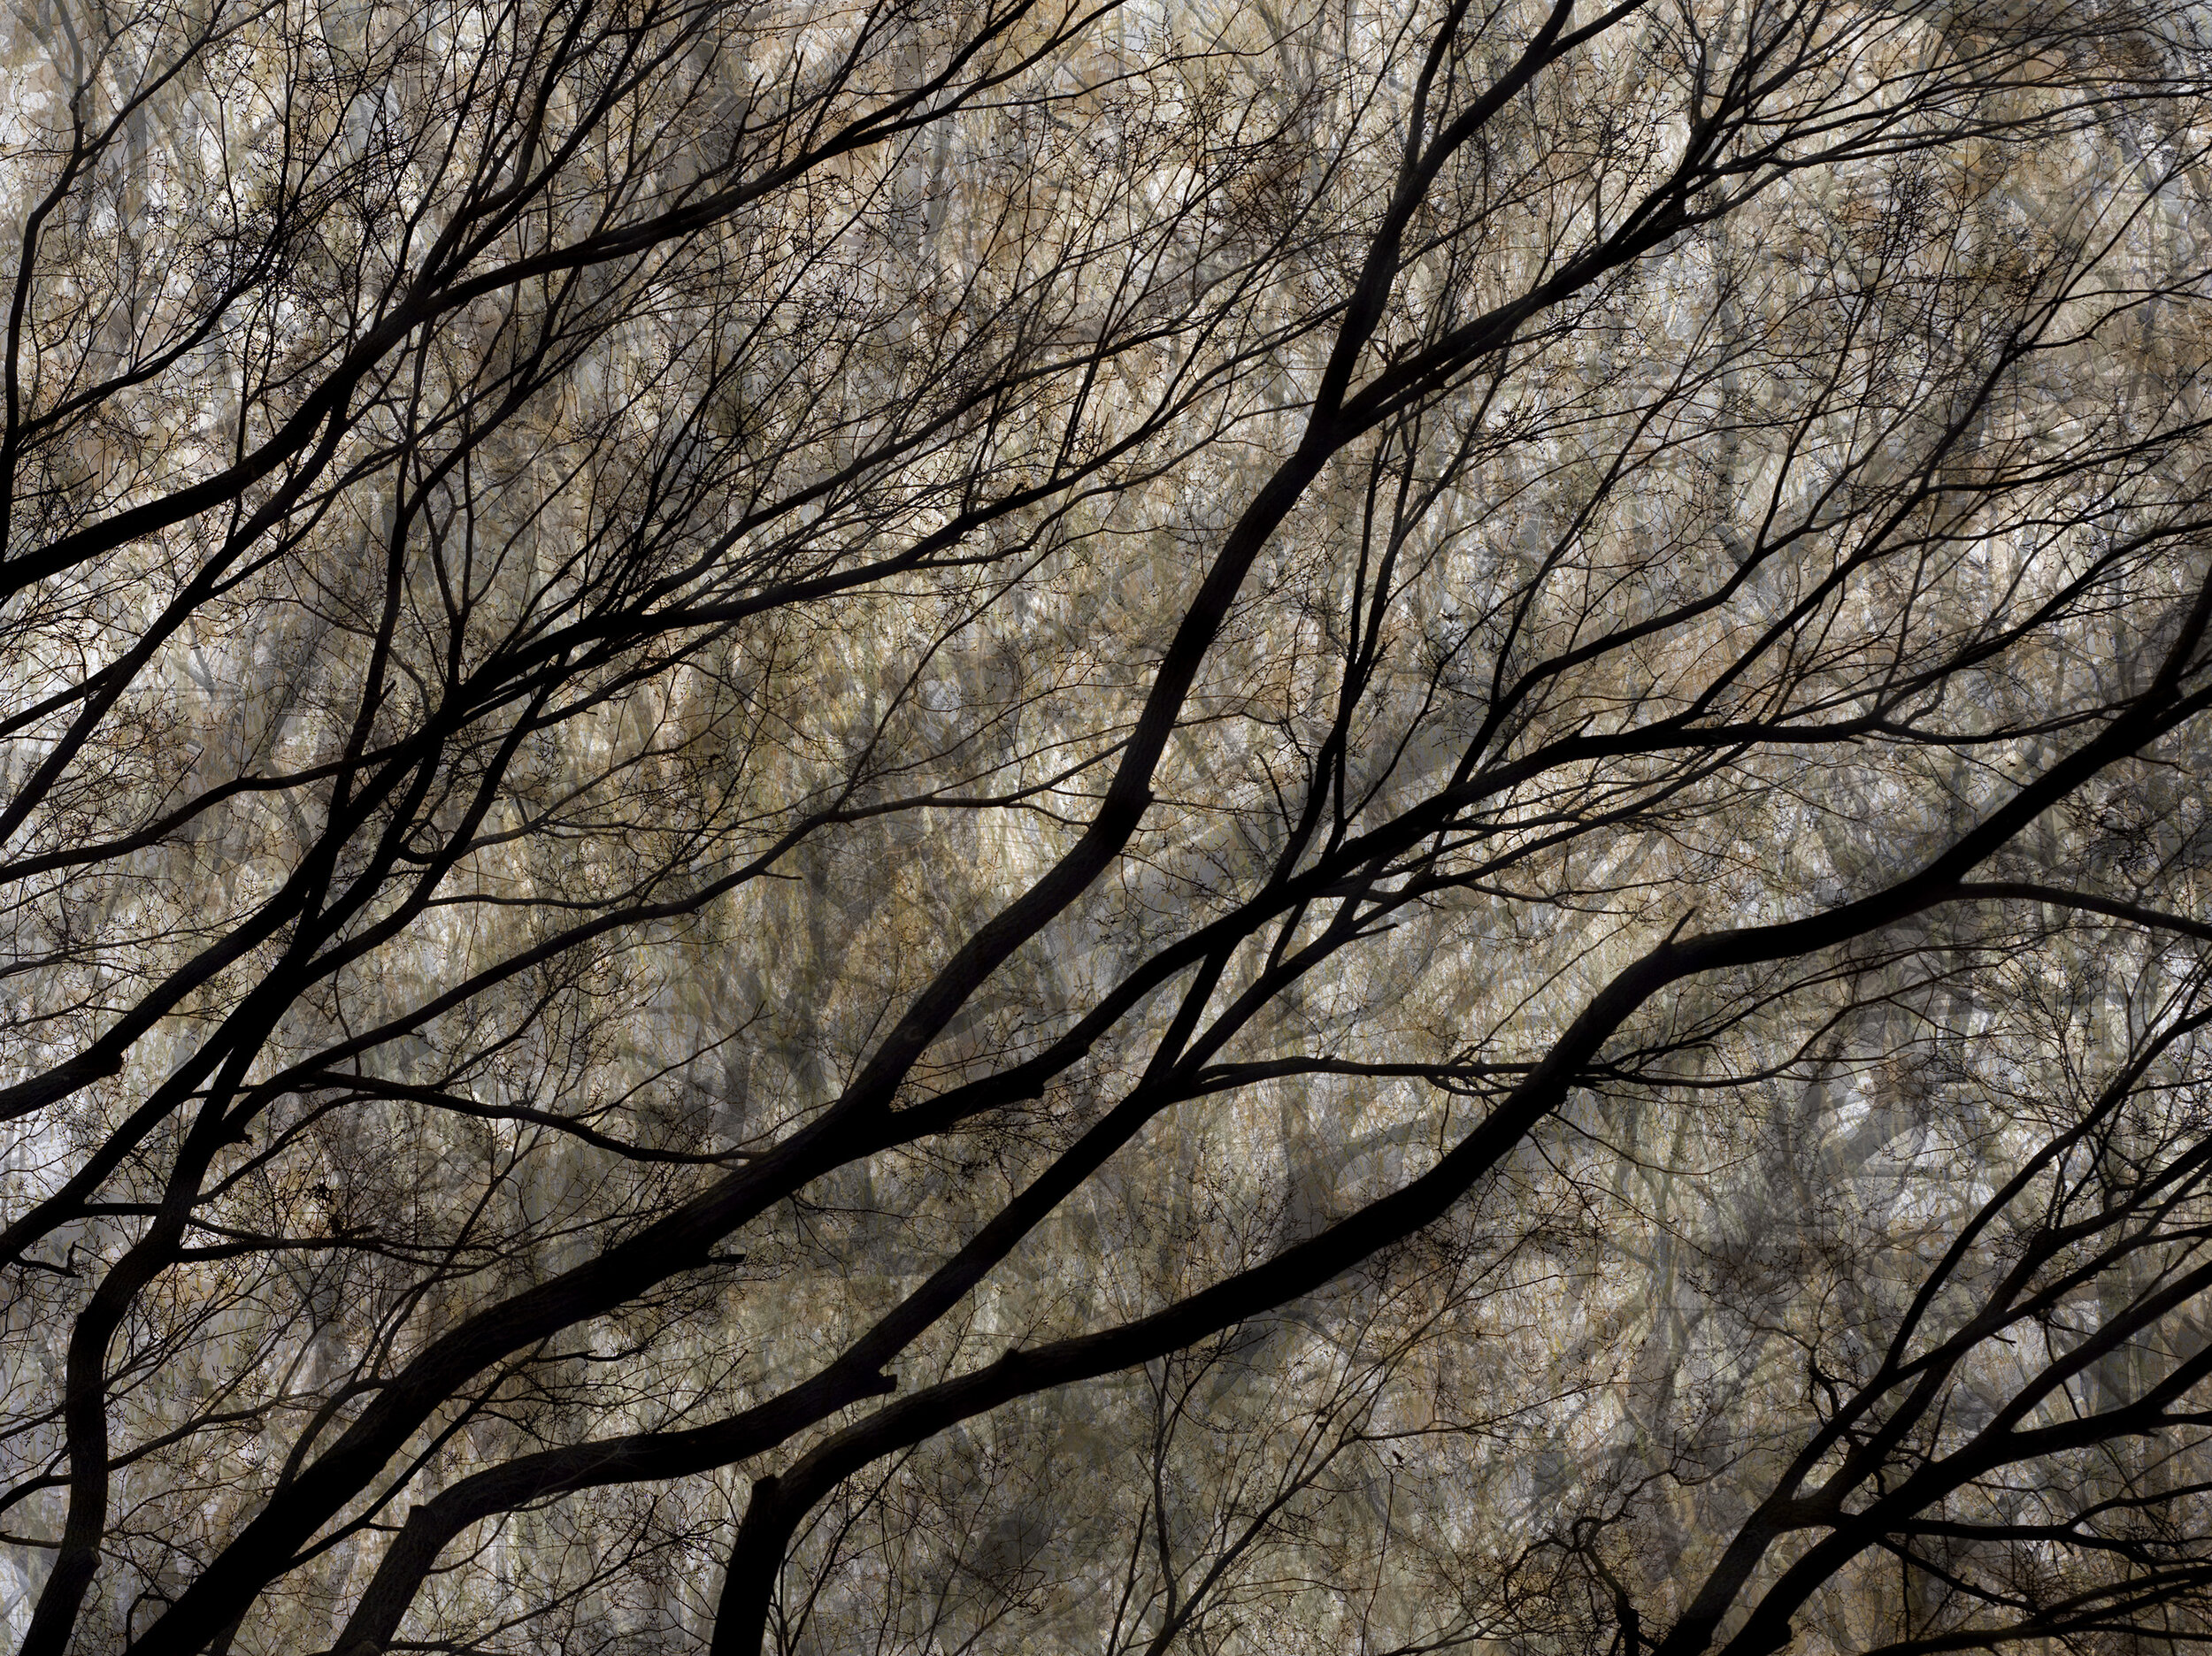 UNTITLED.  TREES 147  |  David Zimmerman